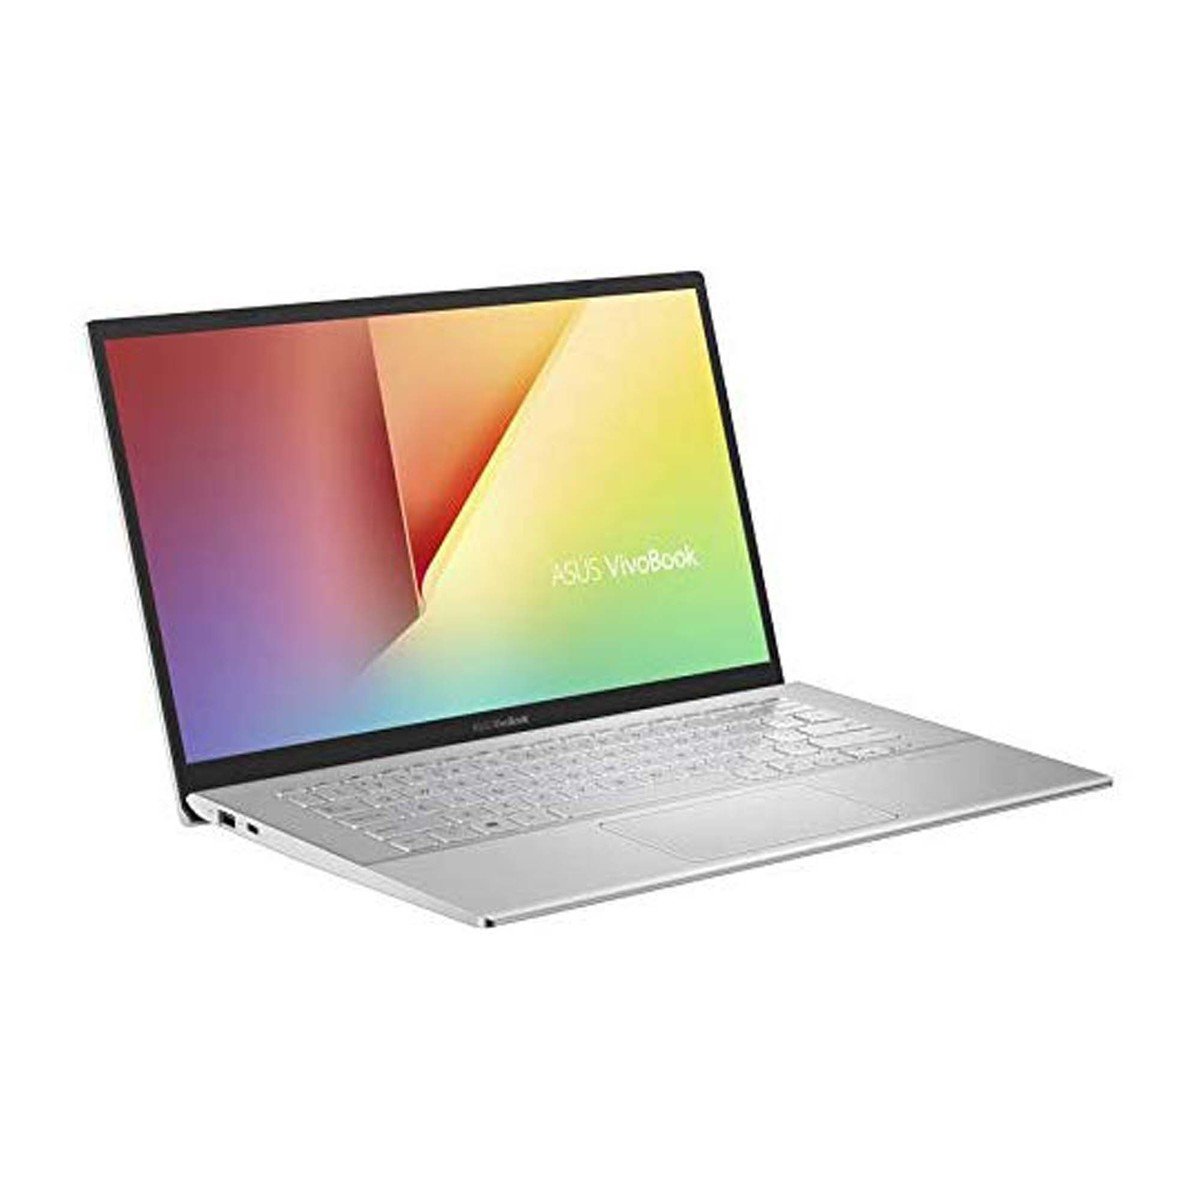 Asus VivoBook 14 A420UA-EK147T Laptop (Transparent Silver) - Intel i3-7020U 2.3 GHz, 4 GB RAM, 128 GB SSD, Integrated Intel UHD Graphics 620, 14 inches LED, Windows 10, Eng-Arb-KB